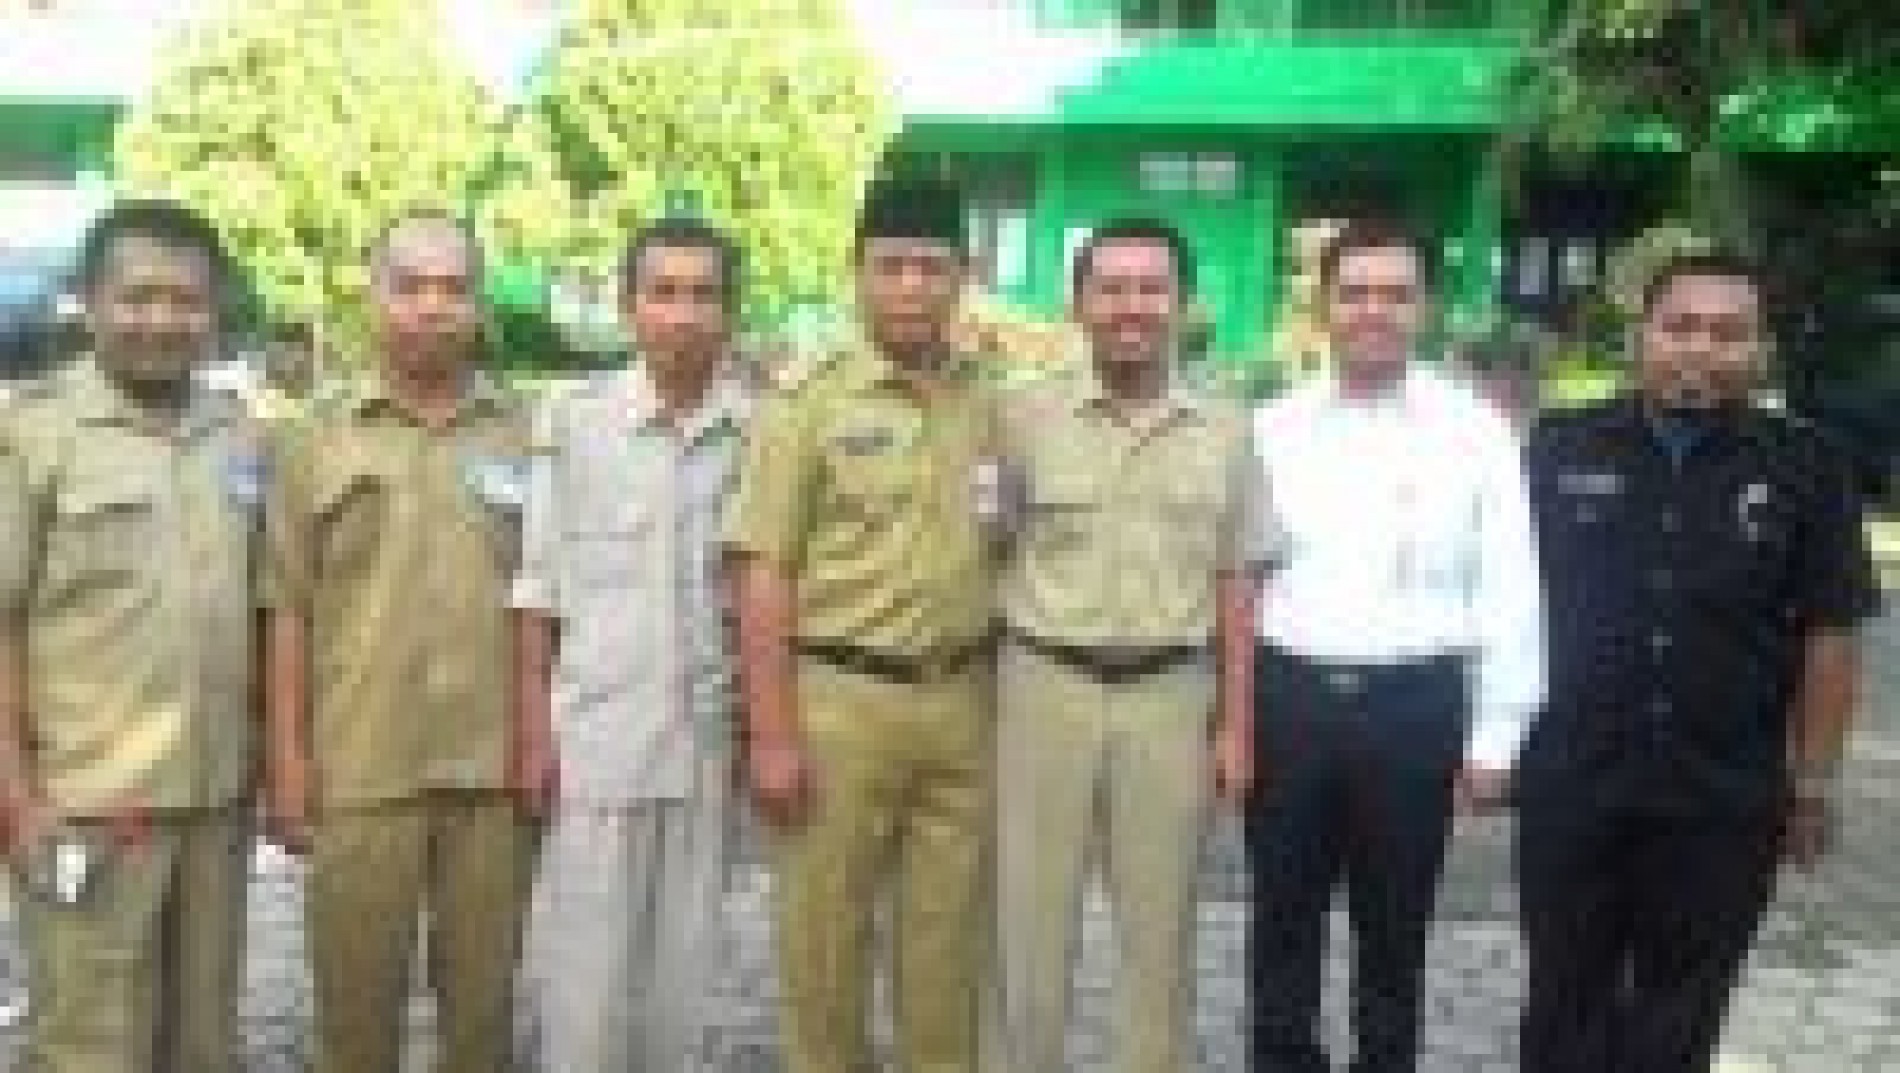 Kunjungan Paman Birin (Gubernur Kalimantan Selatan) ke SMAGA